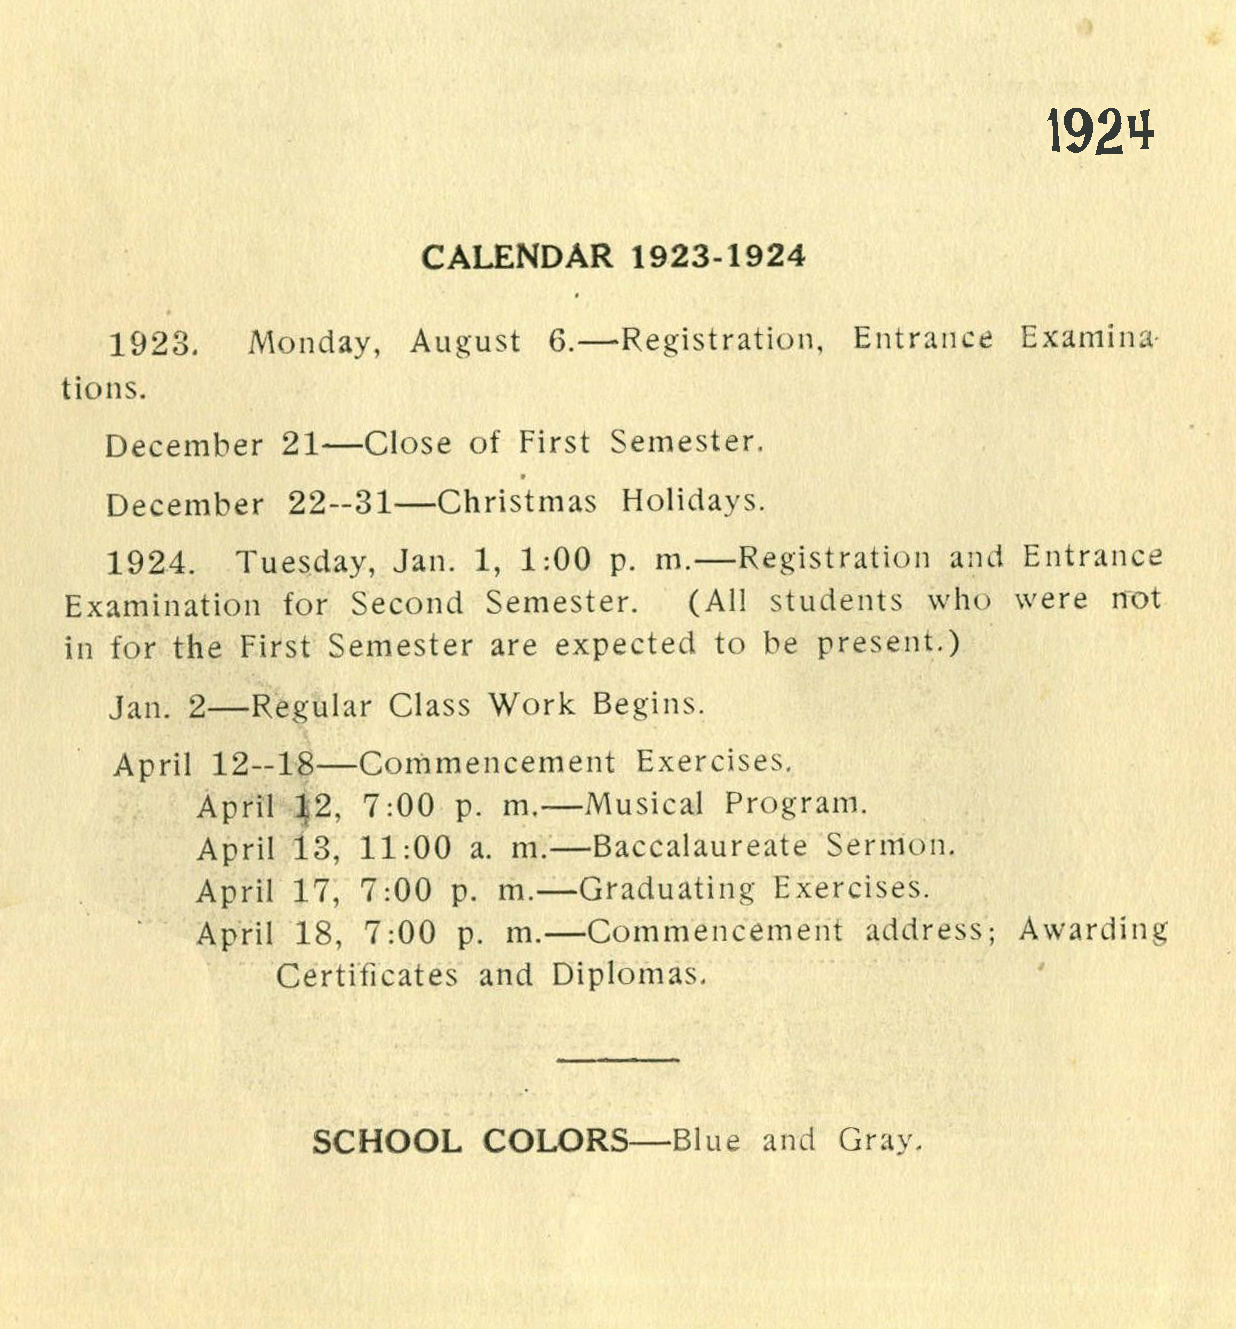 Calendar 1924